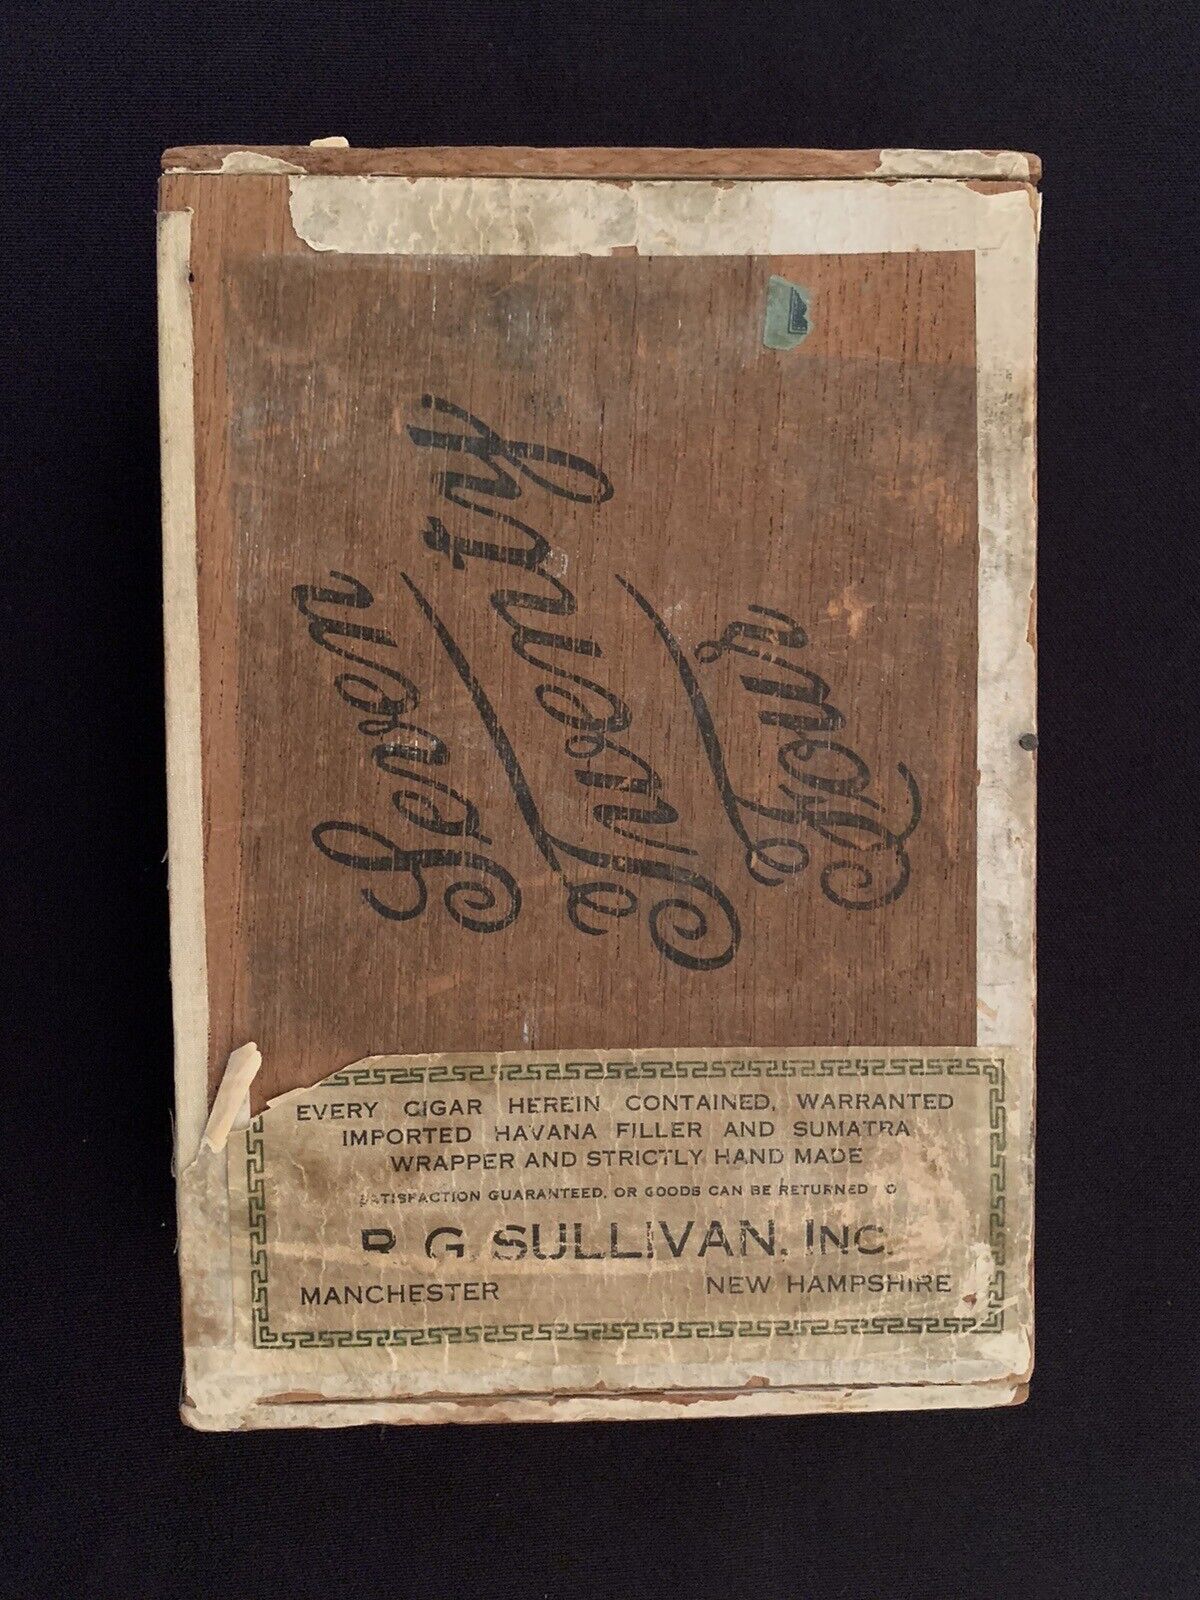 Antique R.G. Sullivan’s Wooden Cigar Box, 7-20-4, Manchester, NH